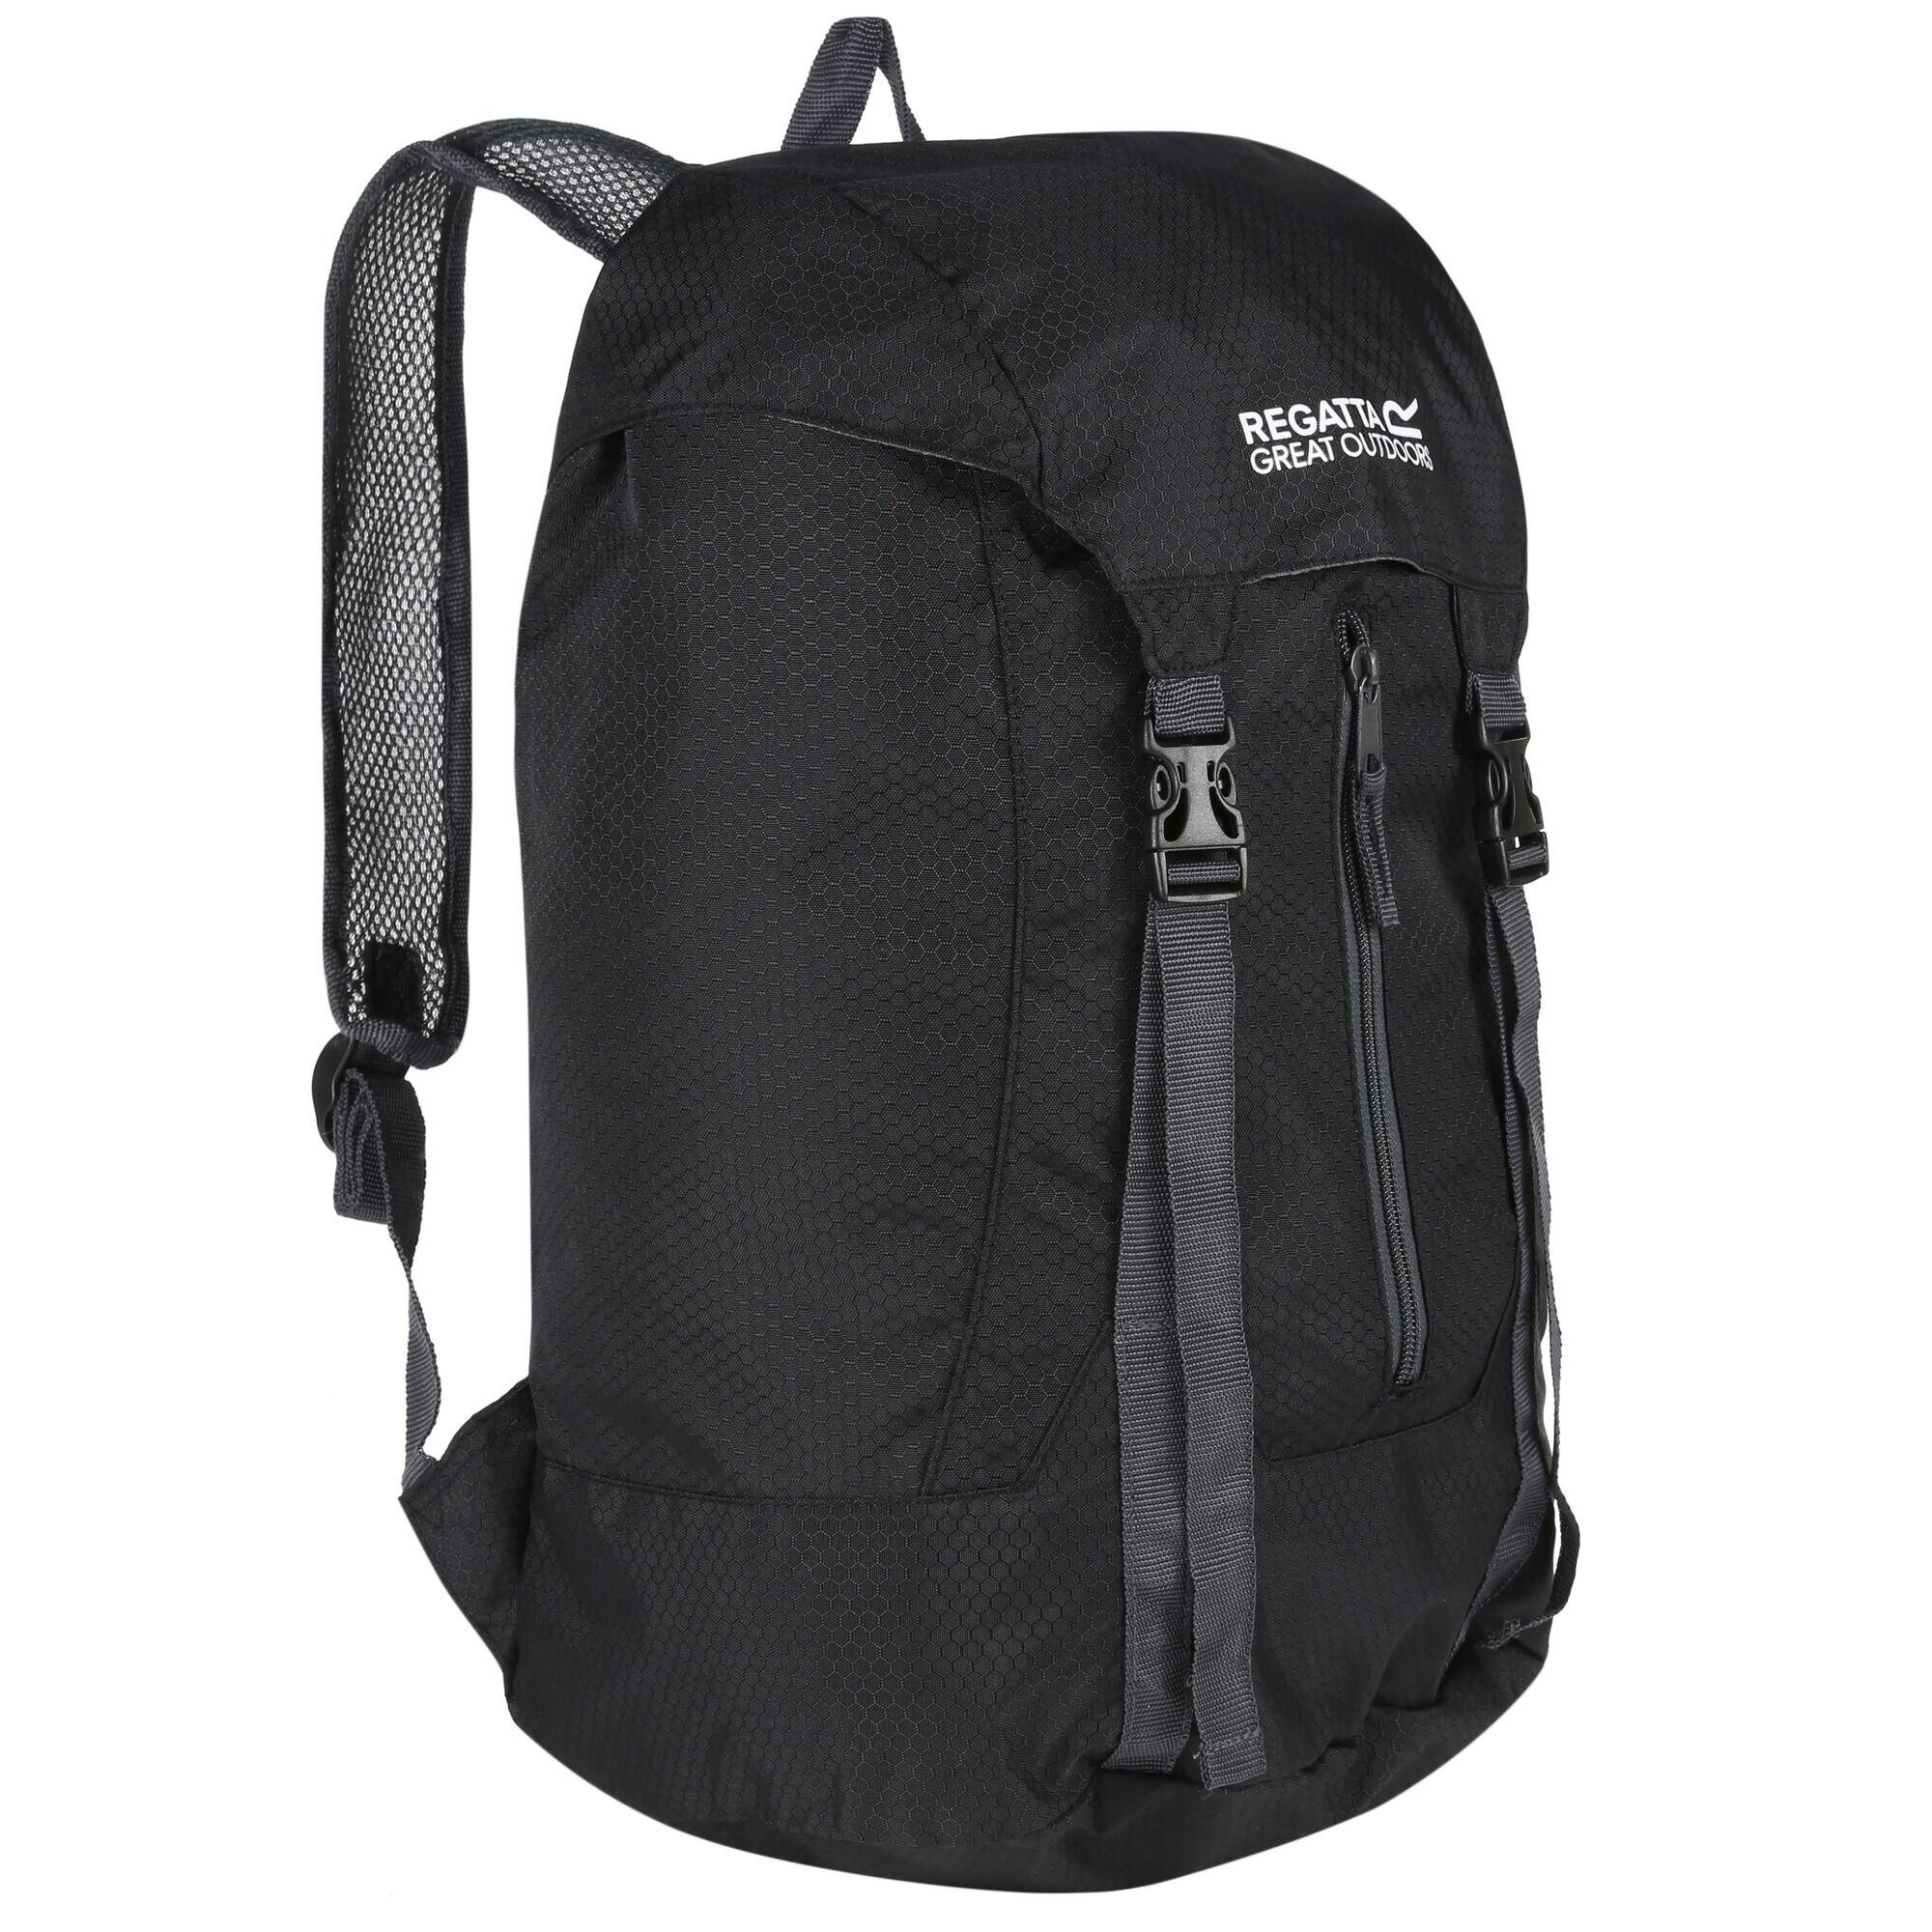 REGATTA Easypack Packaway 25L Adults' Unisex Hiking Rucksack - Black